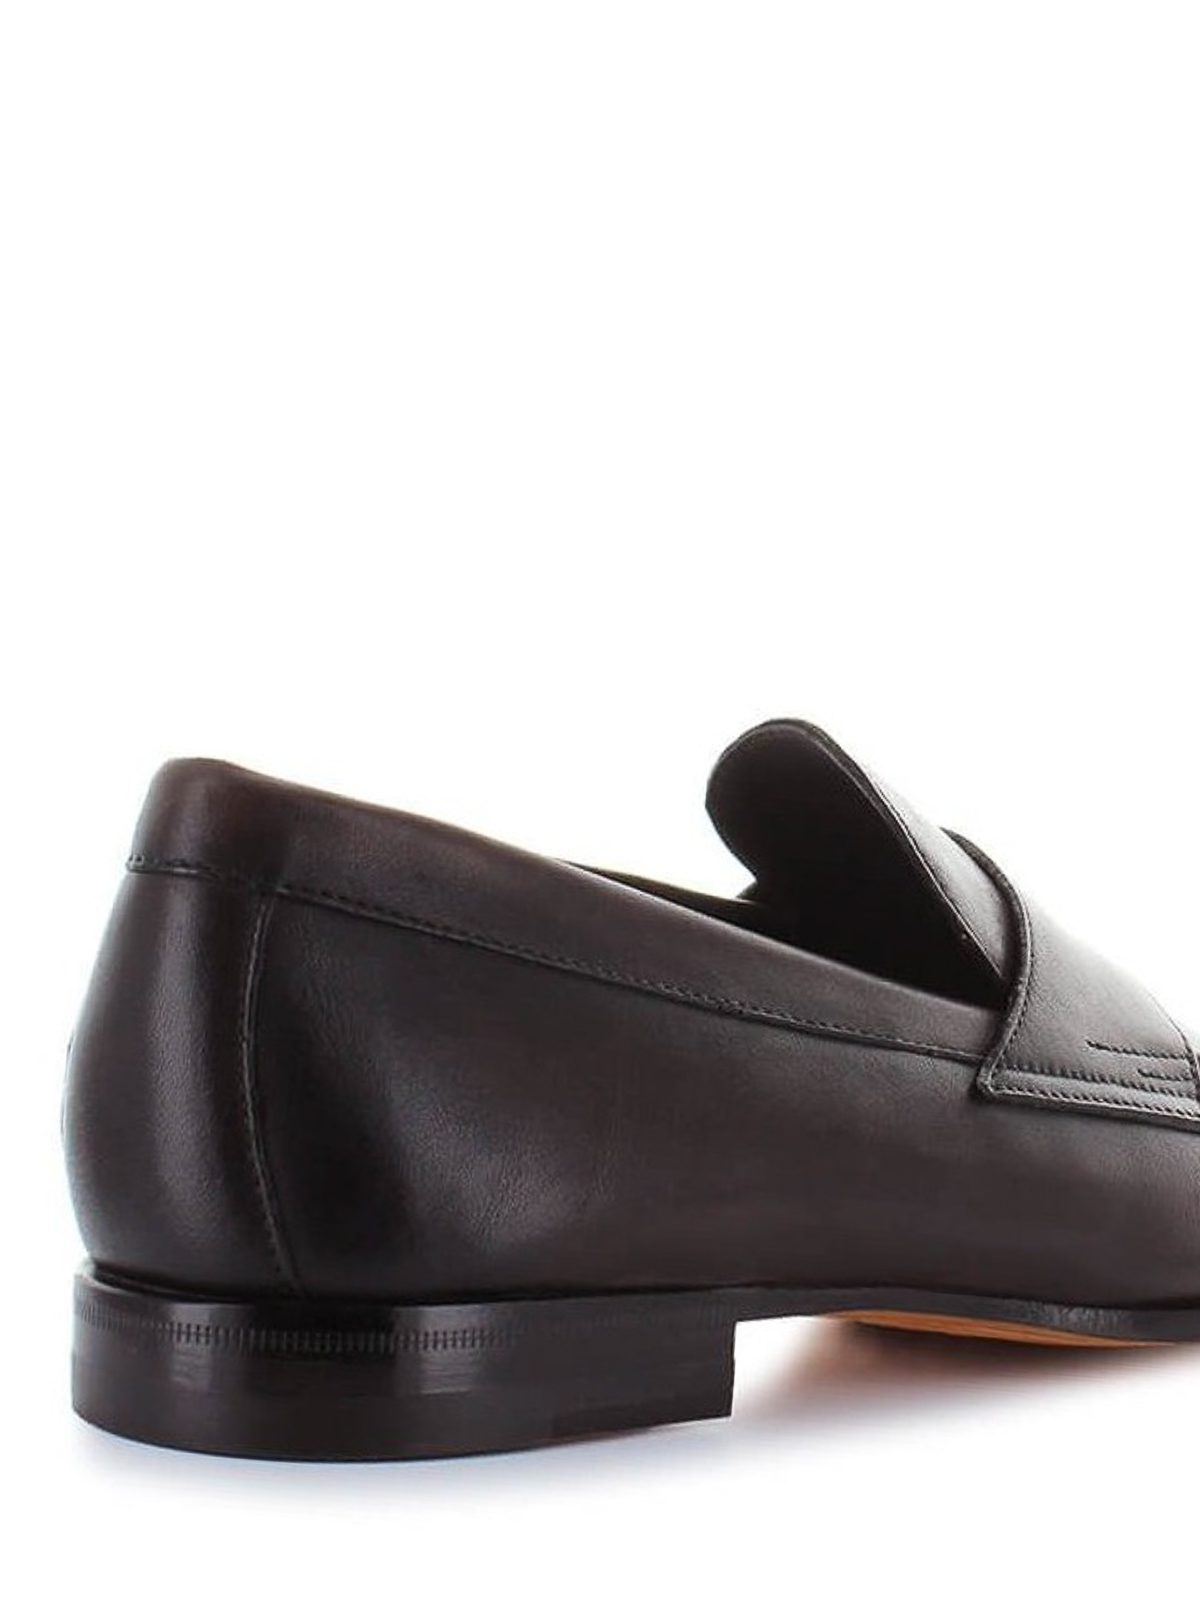 Maken reputatie Collega Loafers & Slippers Santoni - College vintage leather loafers -  MCNC13903LA1SGTQT60